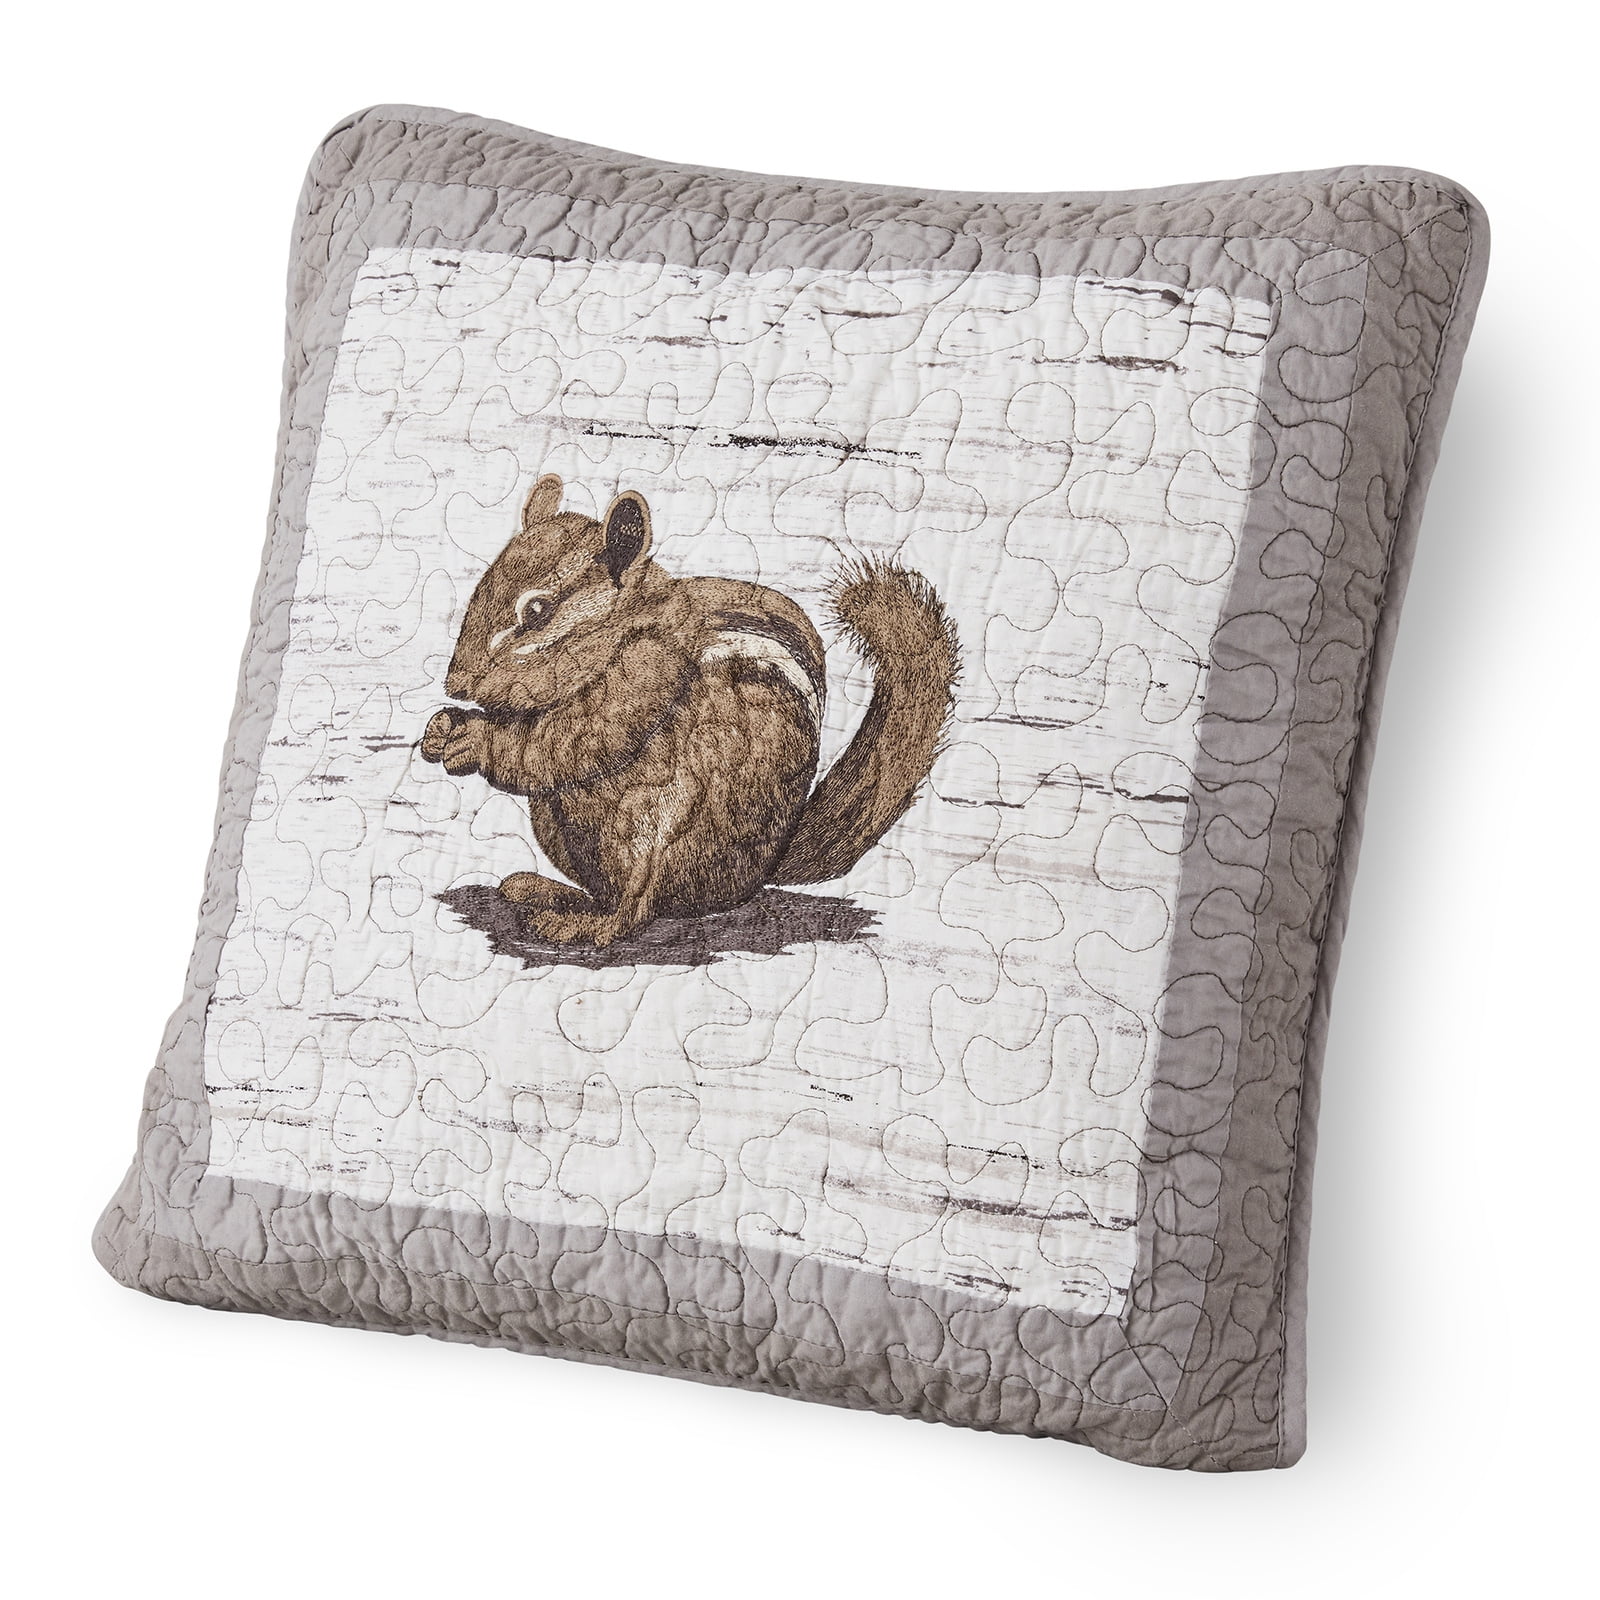 86115 18 X 18 In. Birch Forest Chipmunk Decorative Pillow, Multi Color